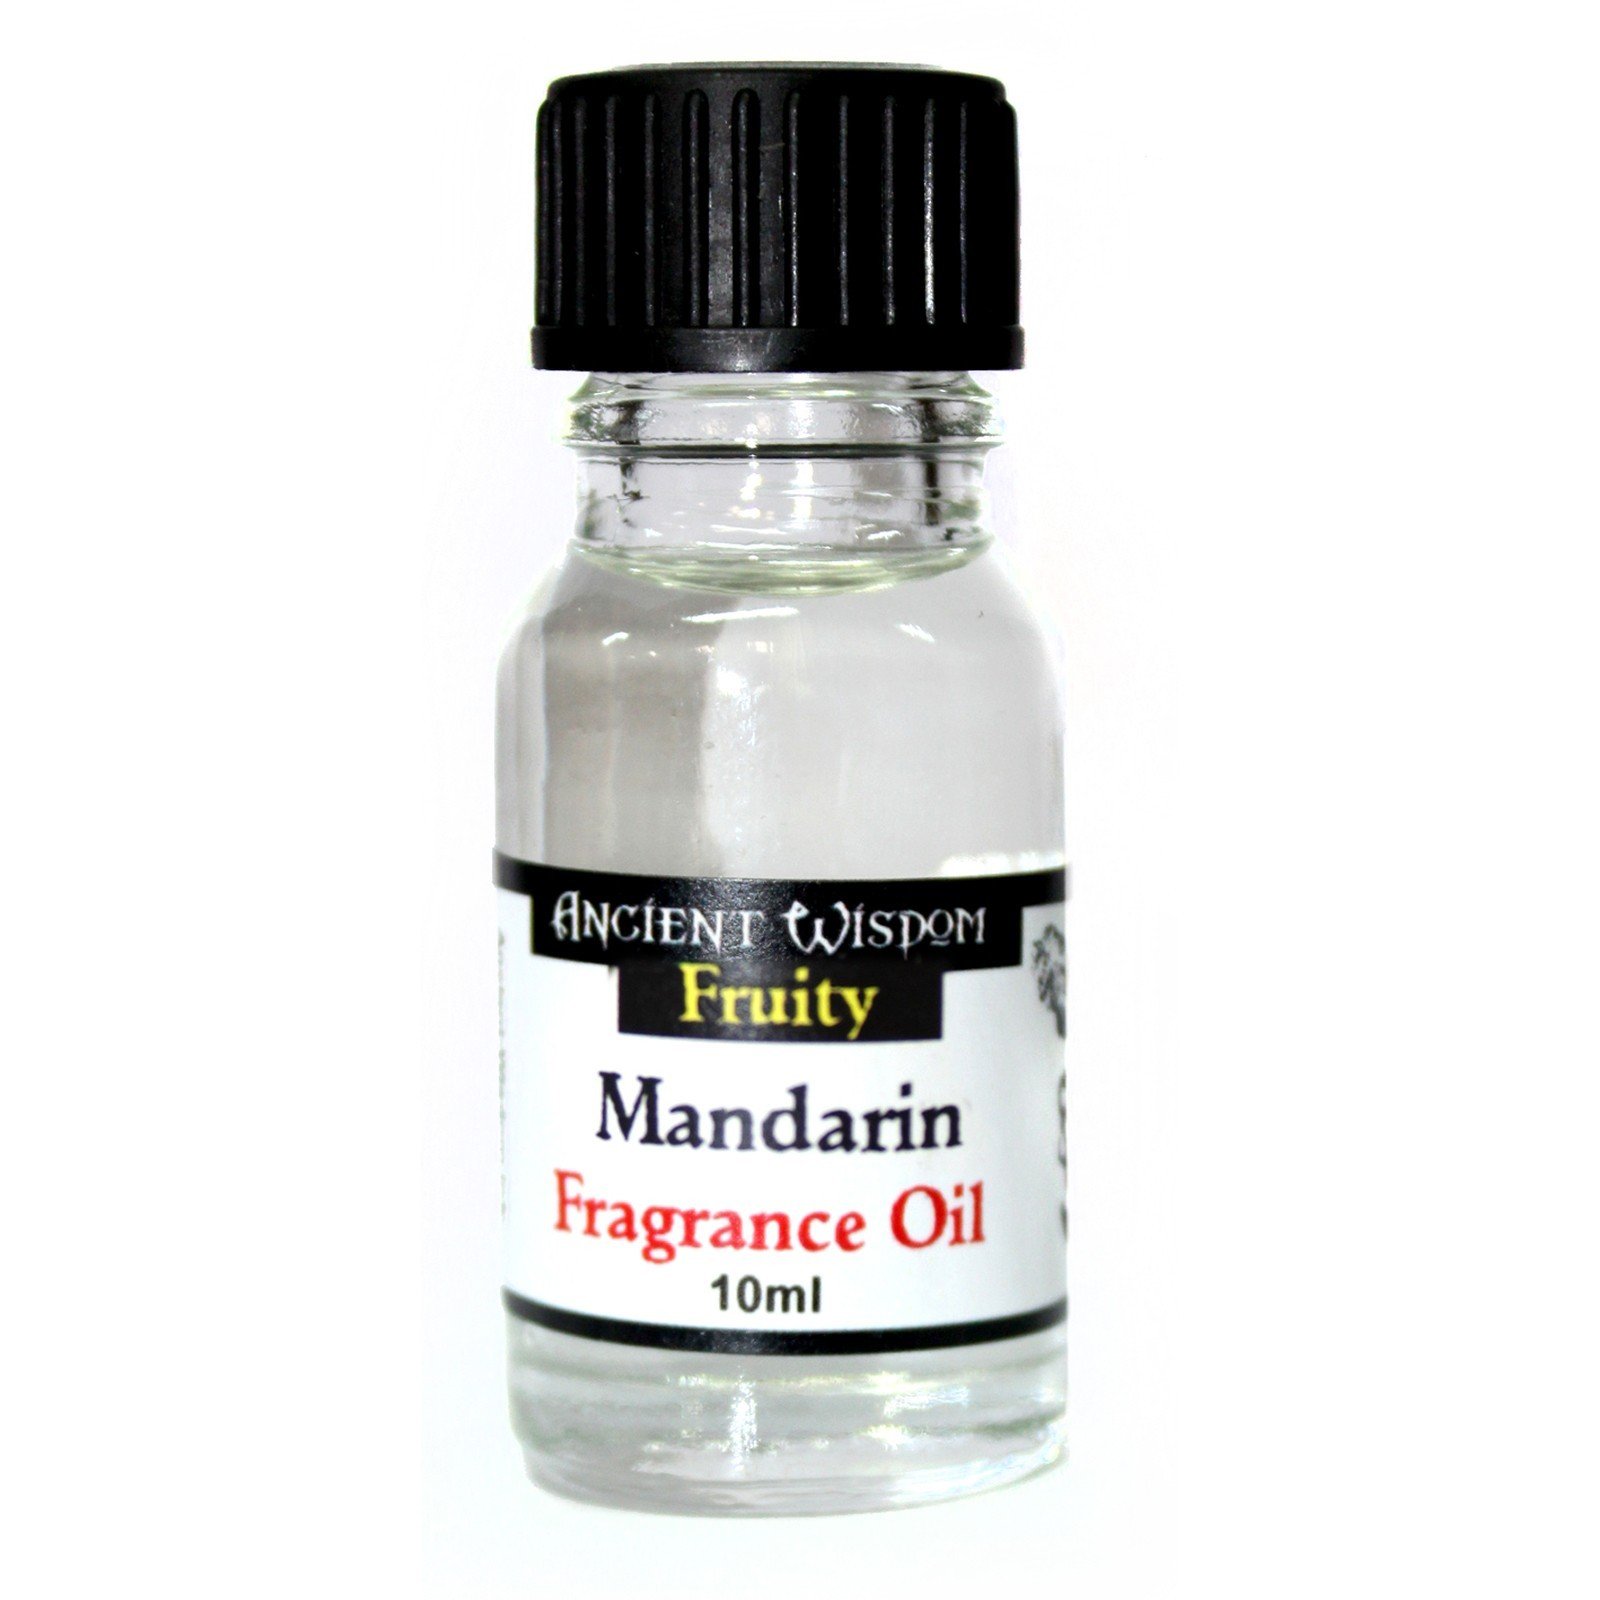 10ml Ароматно масло Мандарина (Mandarin)